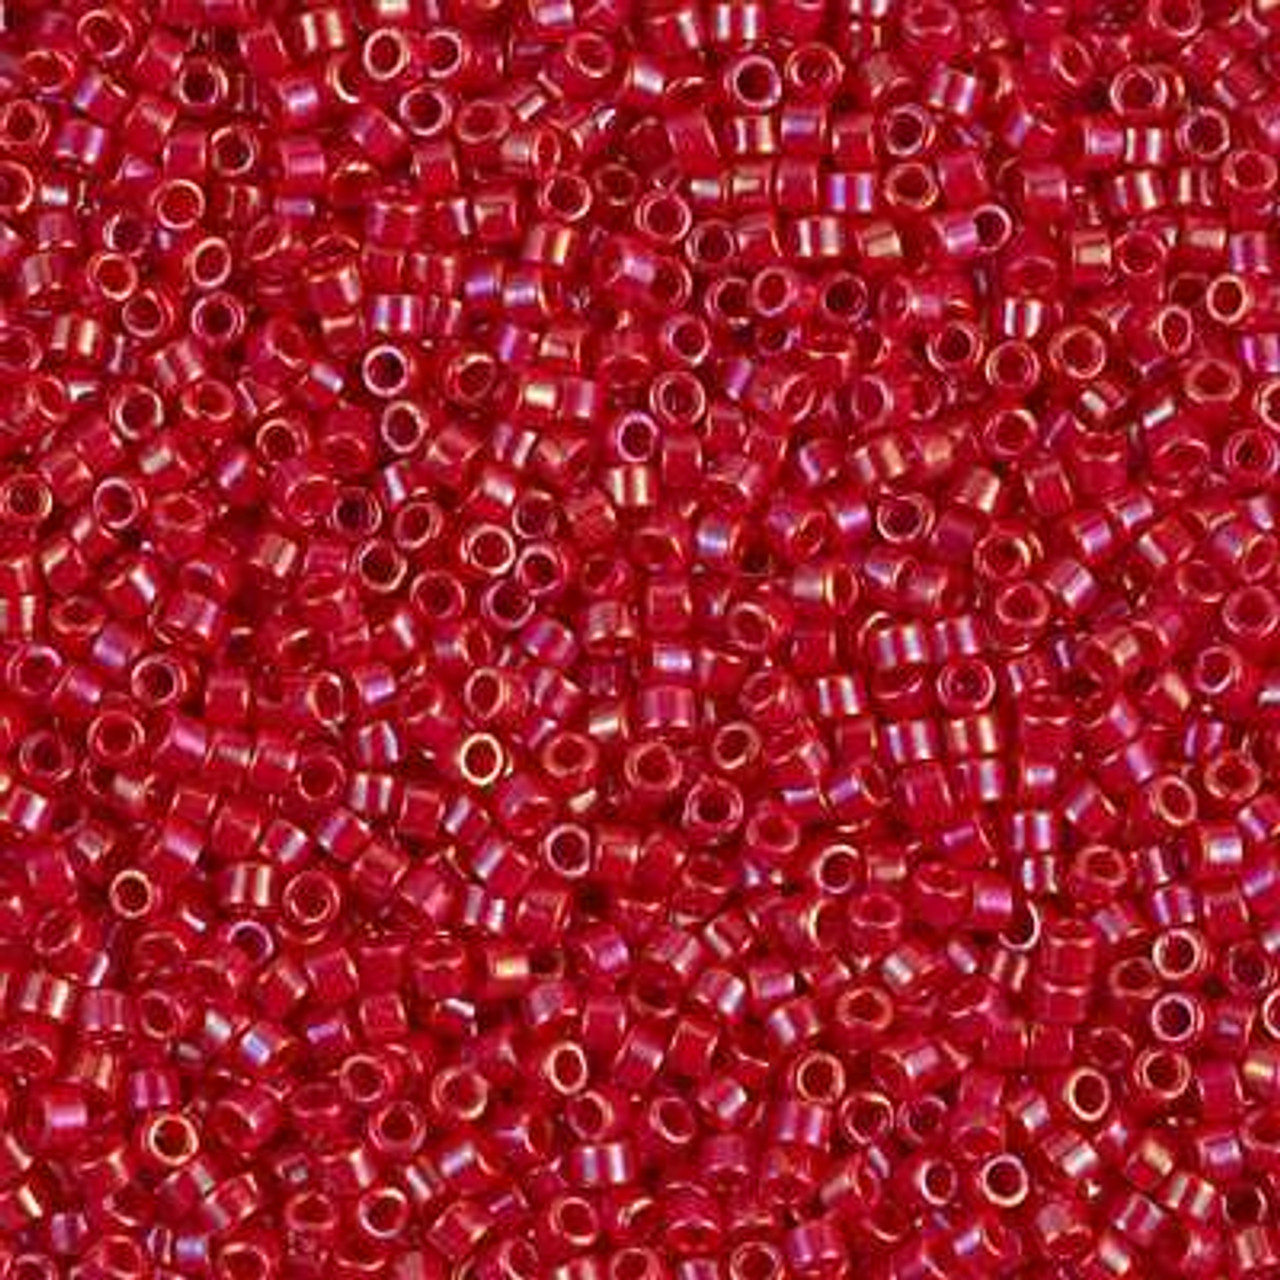 miyuki delica's 11/0 opaque red - beads 